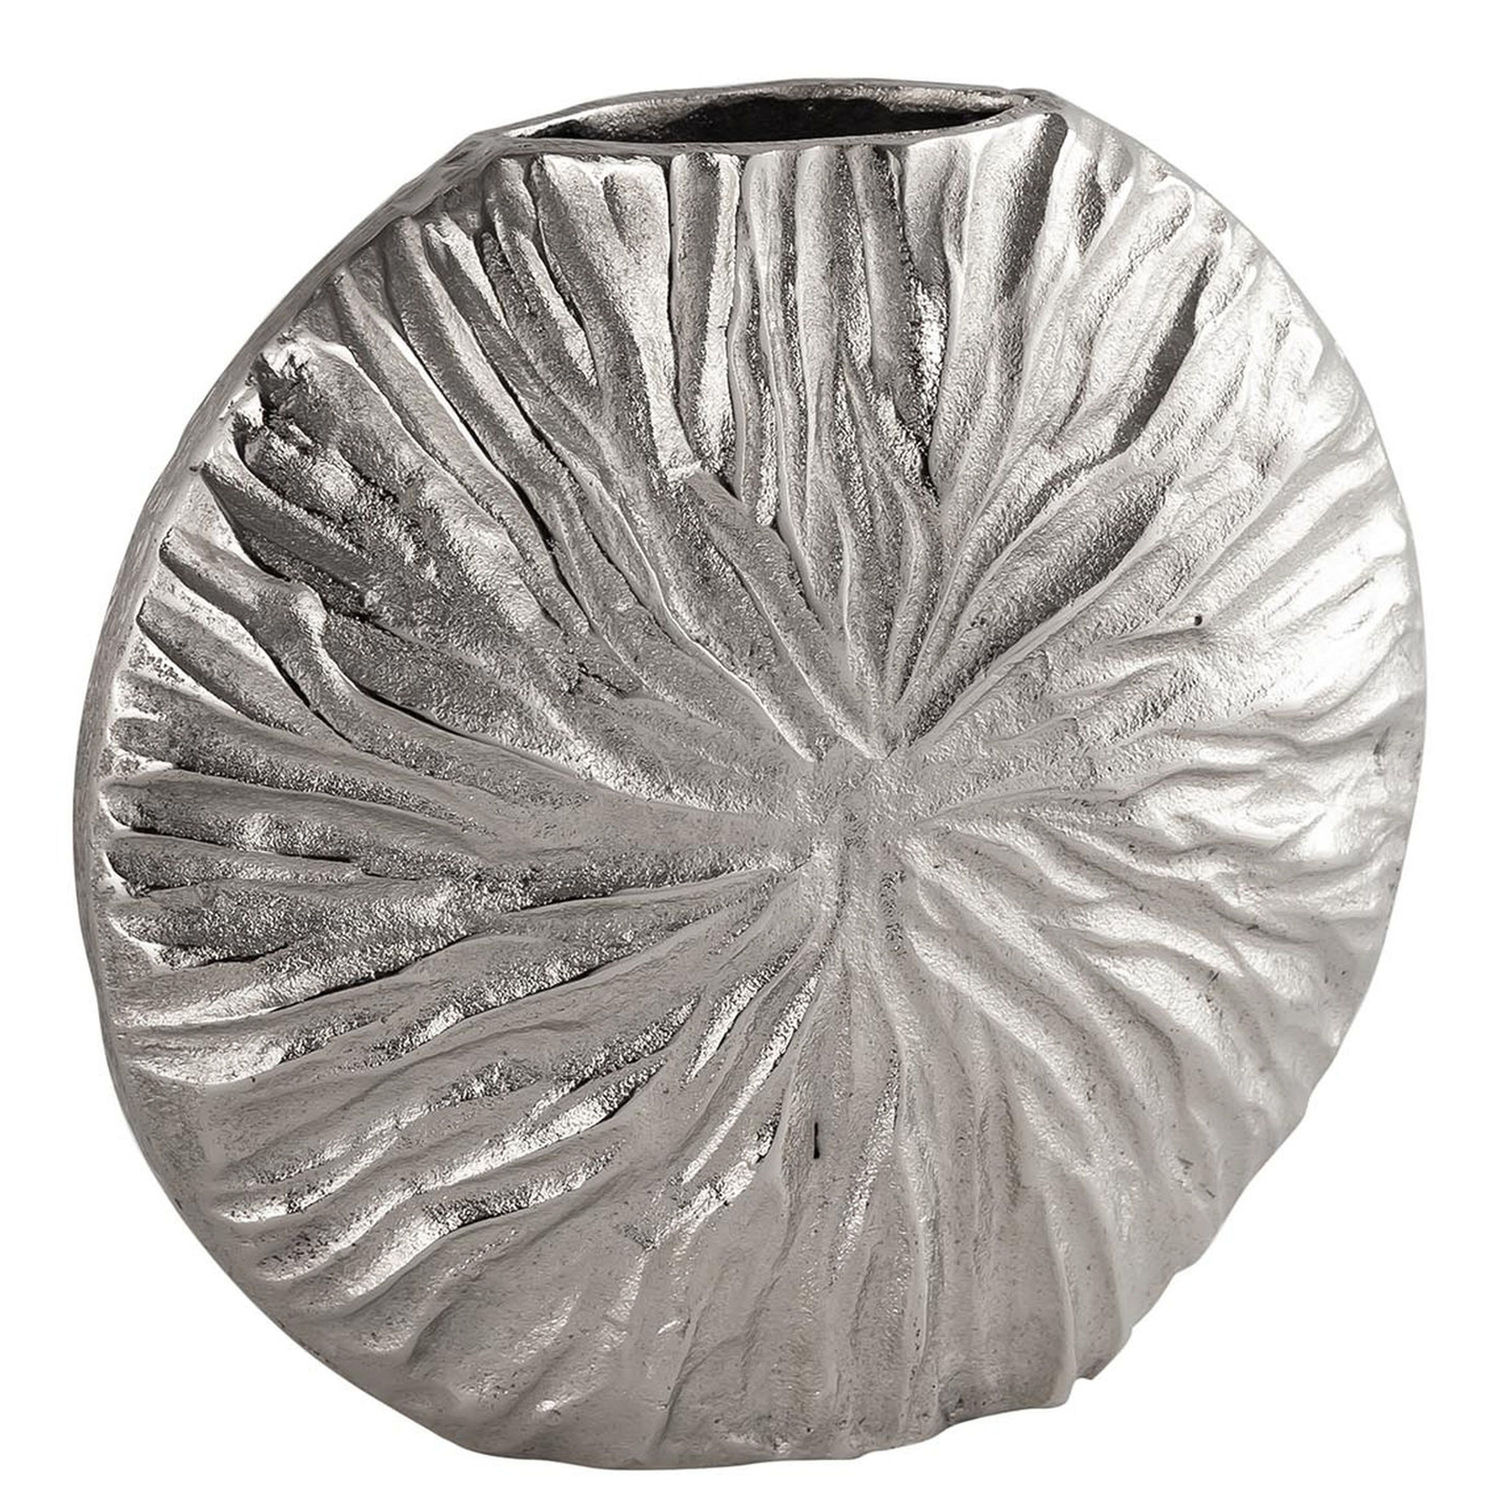 Farrah Collection Silver Textured Medium Vase - Image 1